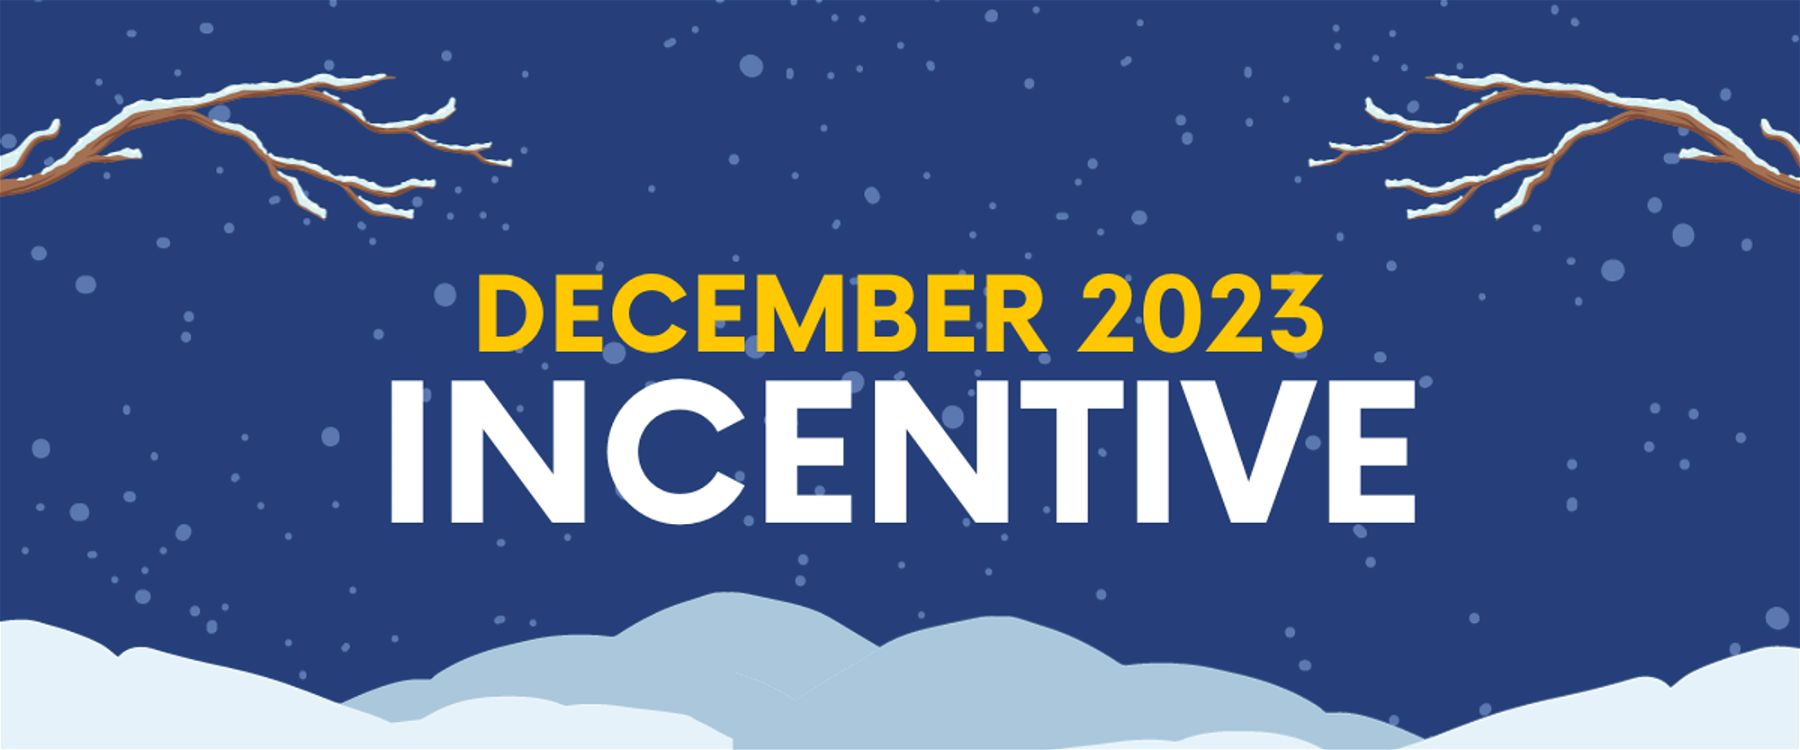 December 2023 Incentive